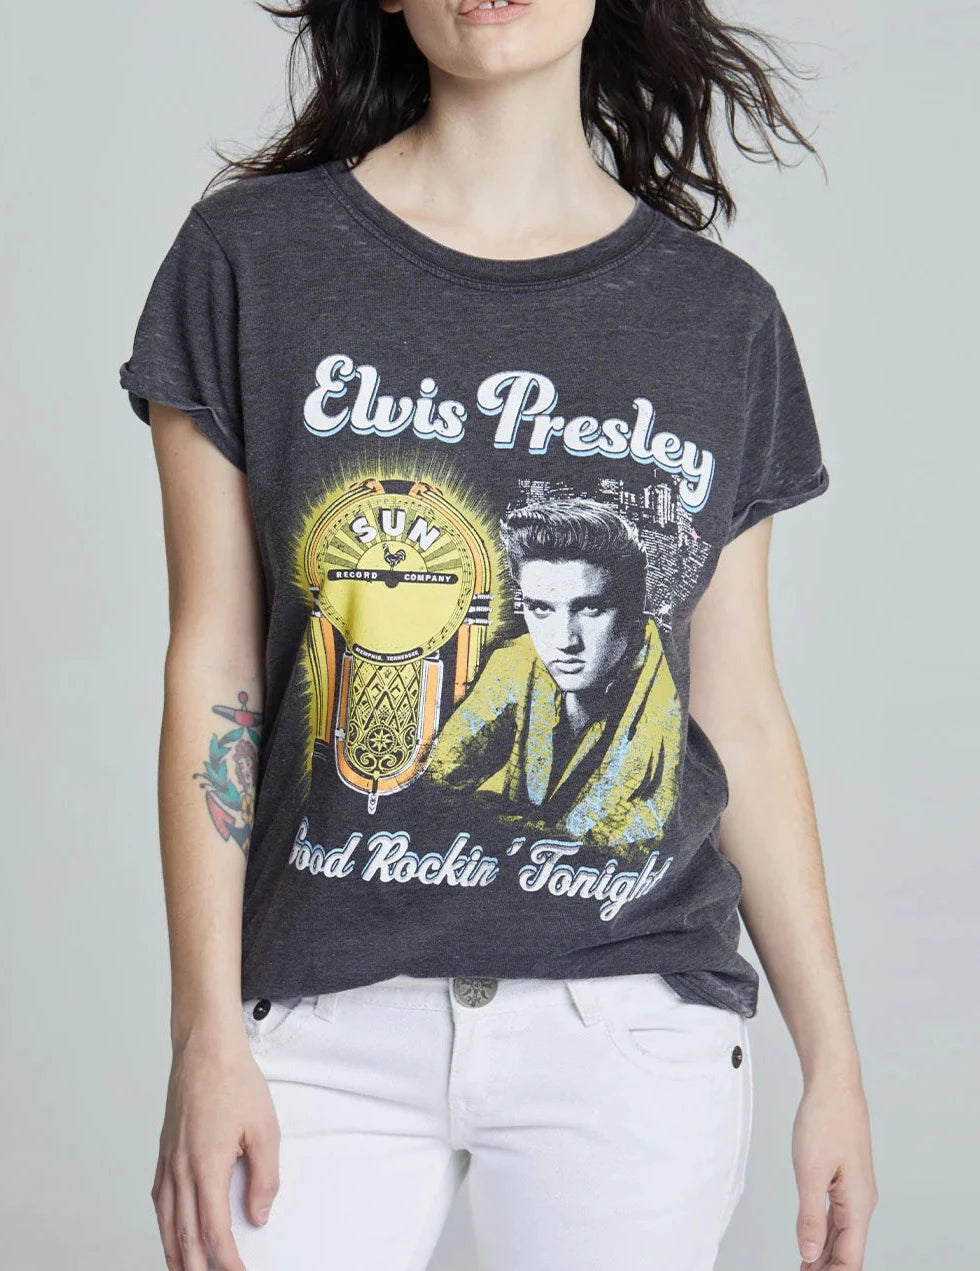 Sun Records x Elvis Presley Rockin' Tee